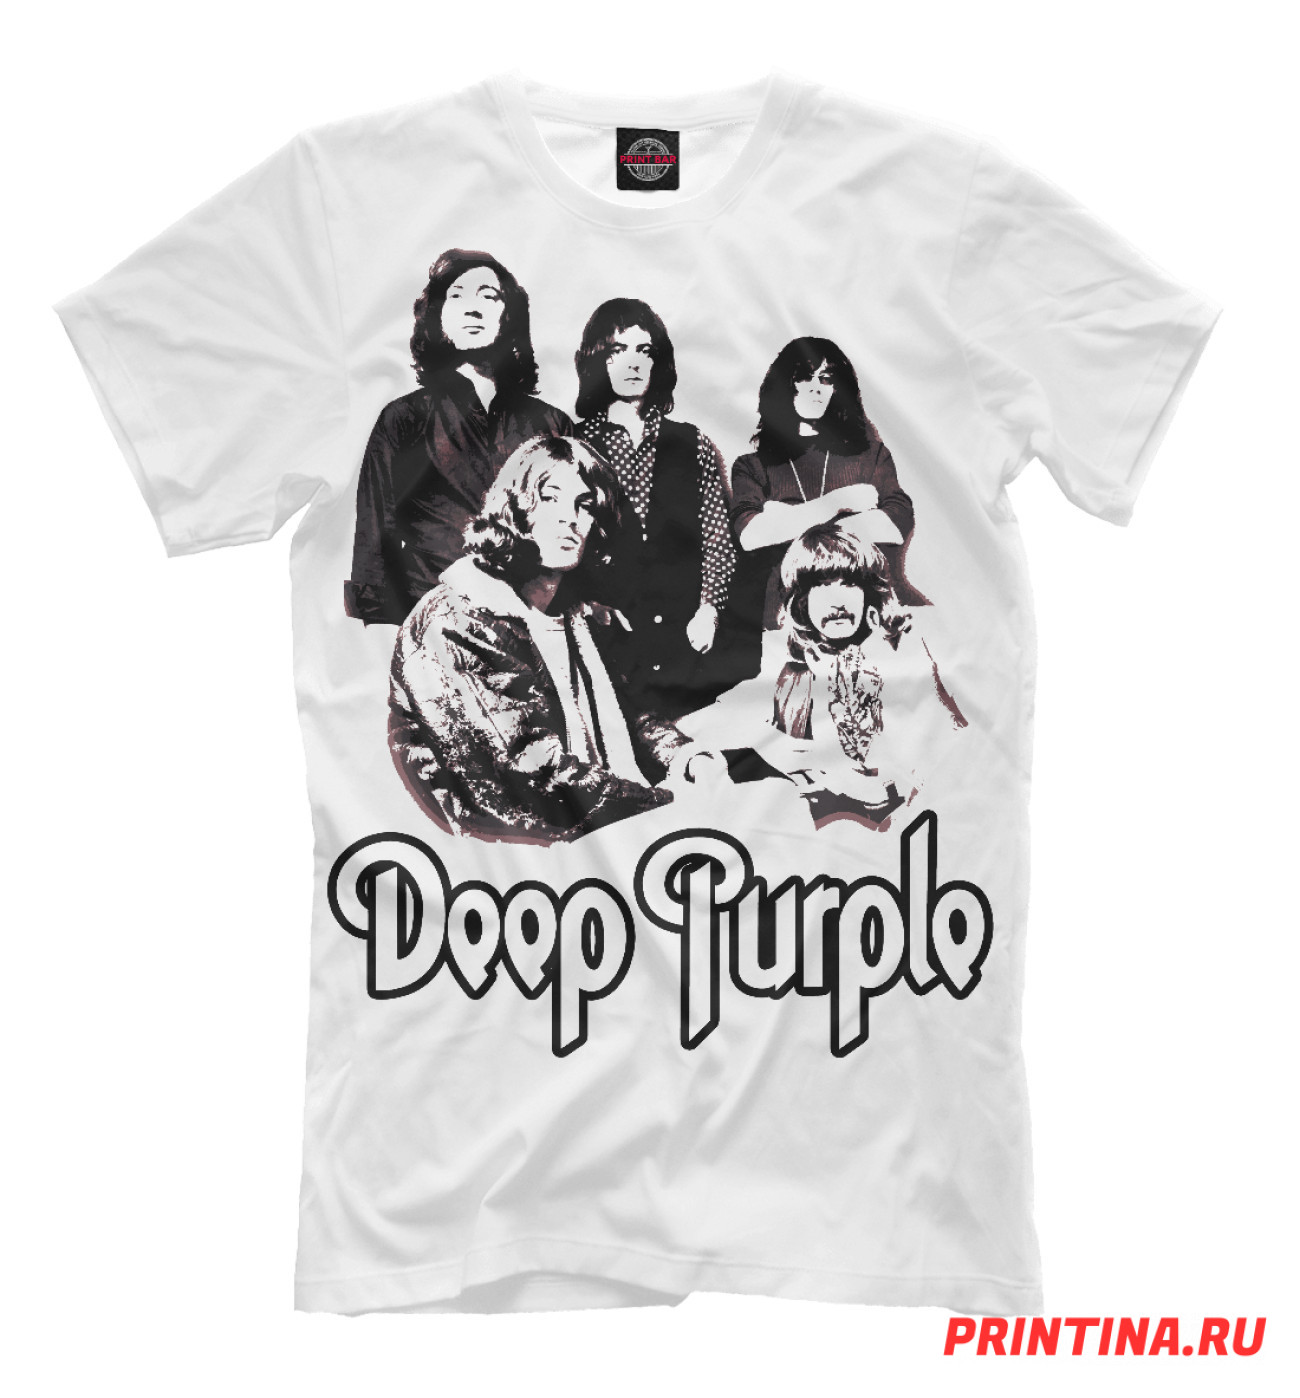 Мужская Футболка Deep Purple, артикул: PUR-709861-fut-2